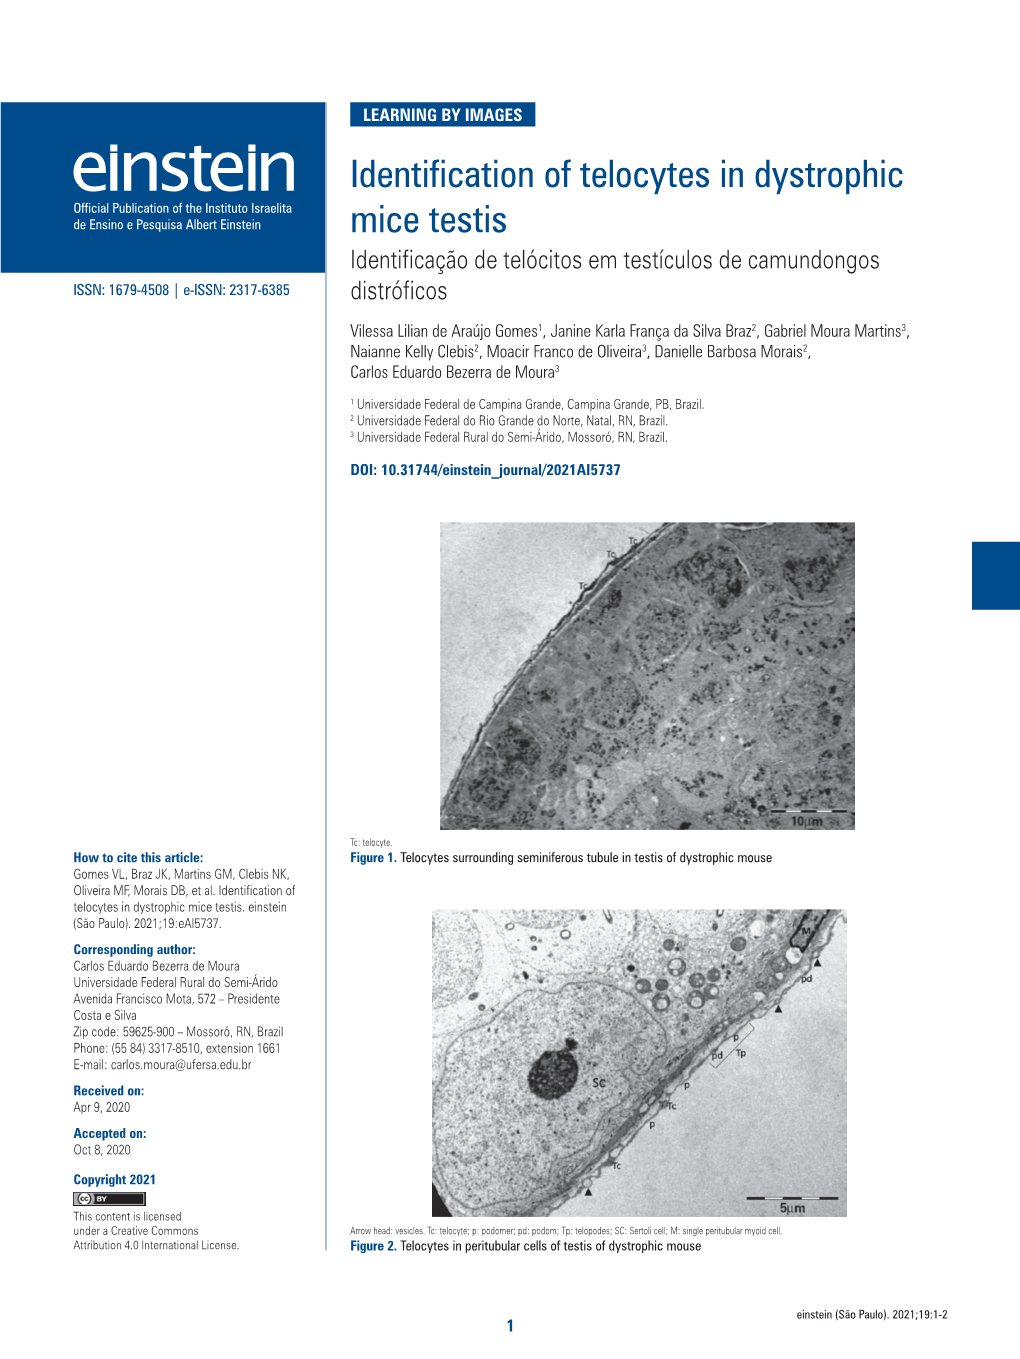 Identification of Telocytes in Dystrophic Mice Testis